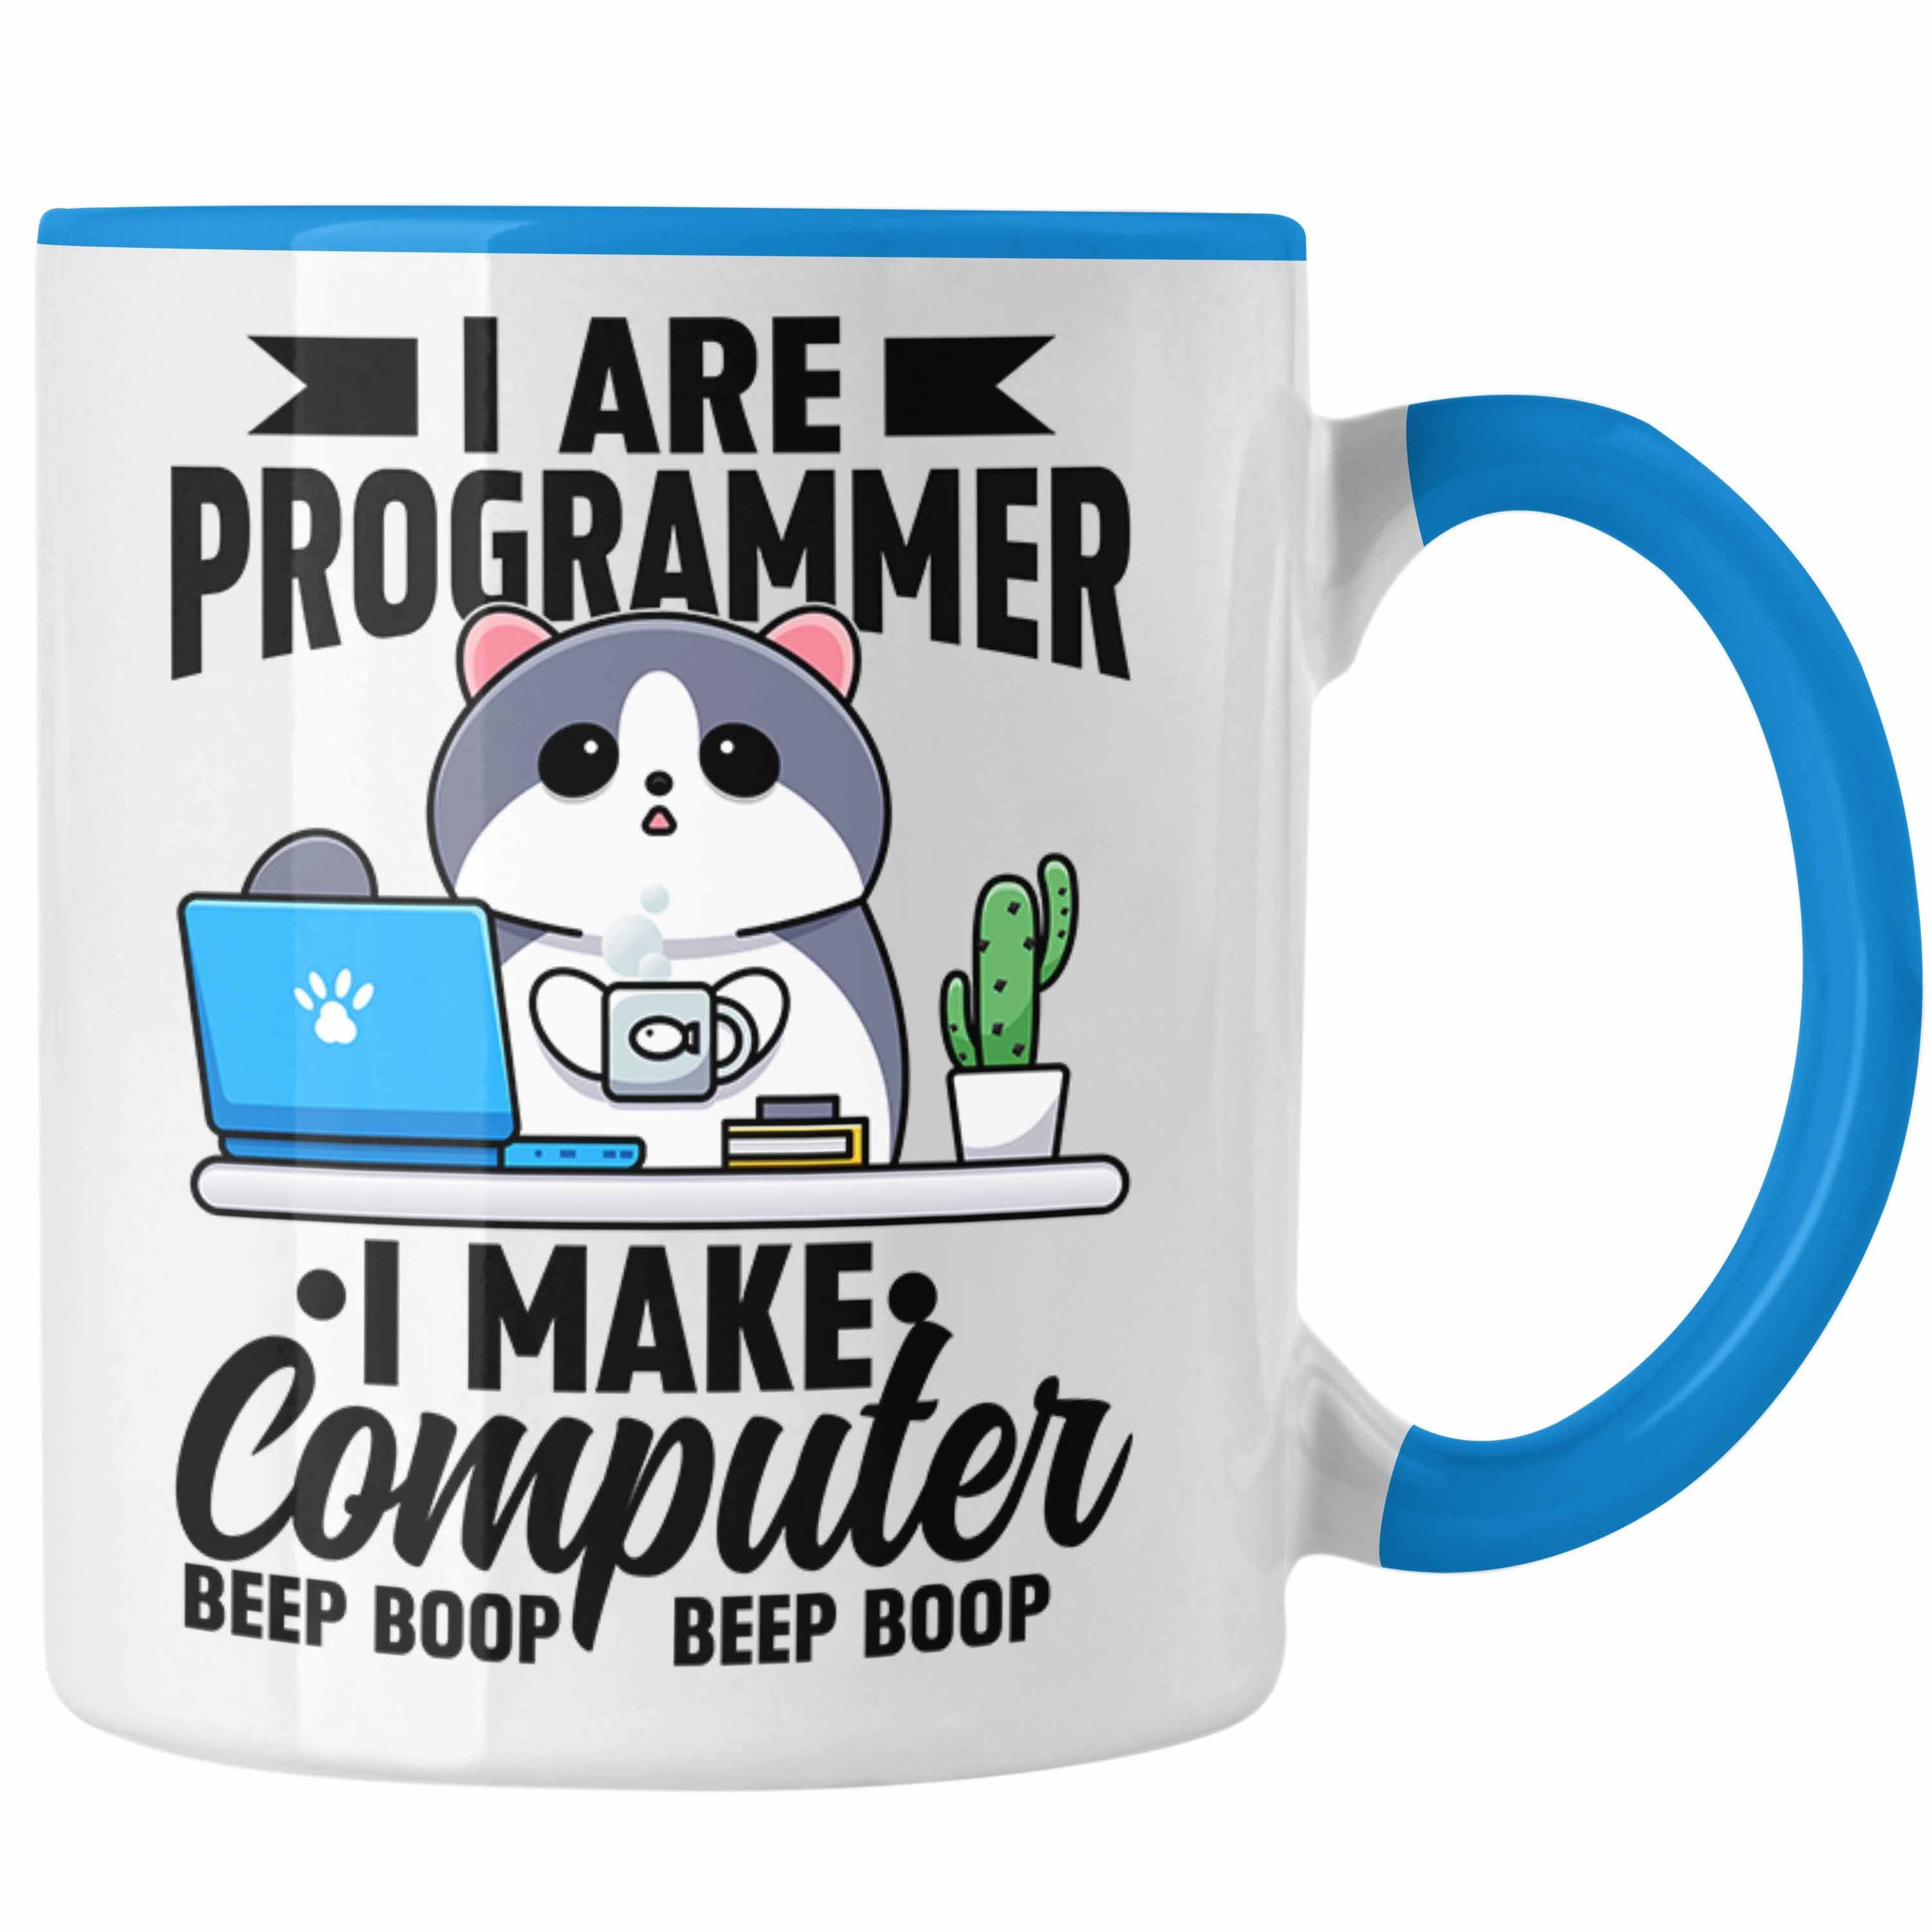 Trendation Tasse Trendation - Lustige Programmierer Tasse Geschenk Humor I Are Programmer I Make Computer Beep Boop Lustiger Spruch Blau